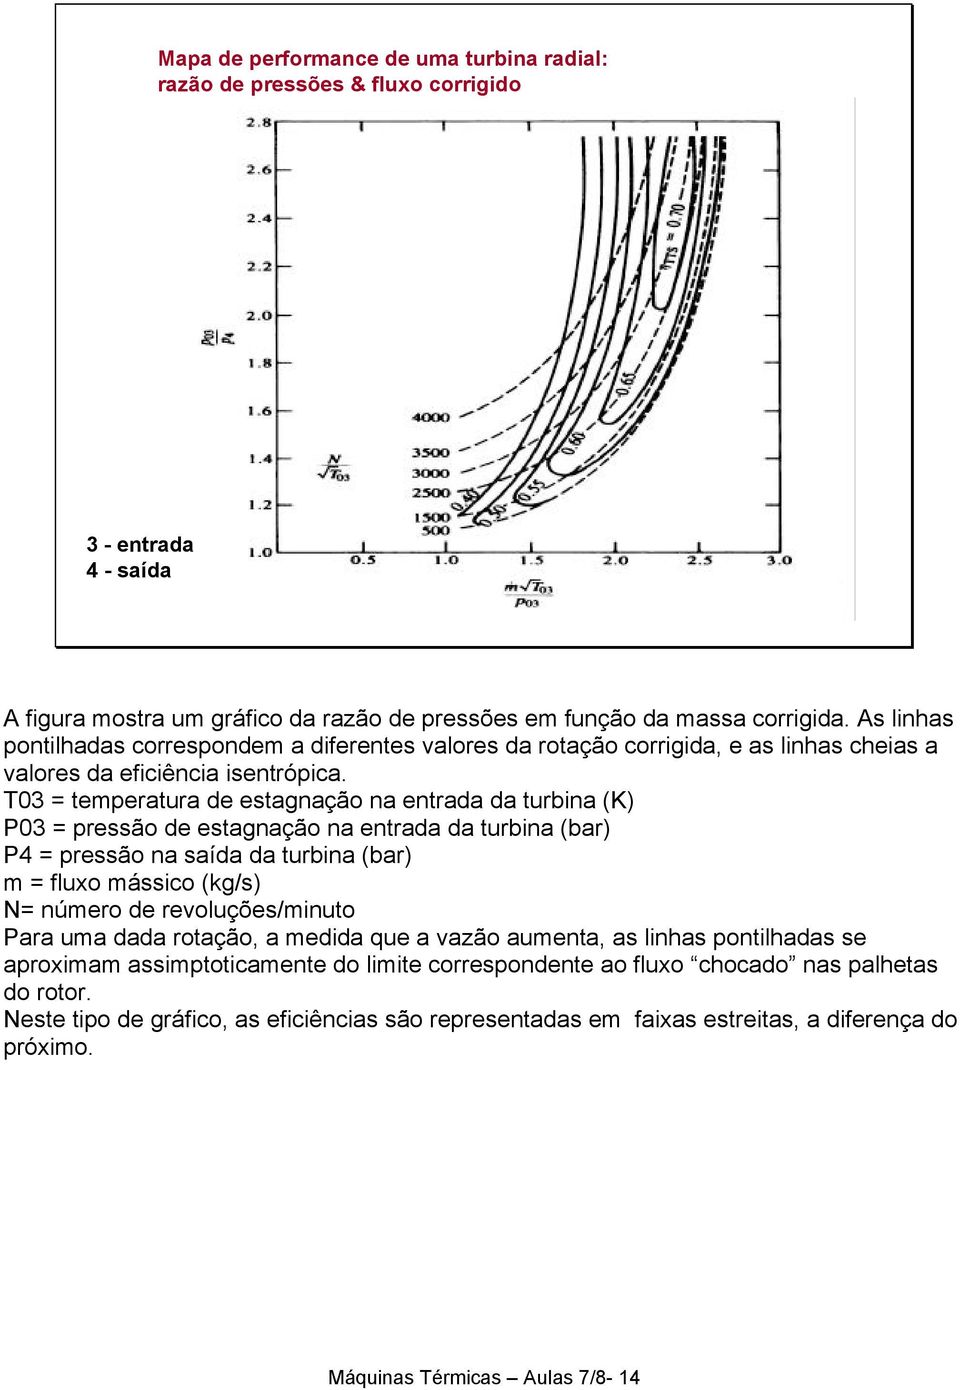 T0 = temperatura de estagnação na entrada da turbina (K P0 = pressão de estagnação na entrada da turbina (bar P4 = pressão na saída da turbina (bar m = fluxo mássico (kg/s N= número de